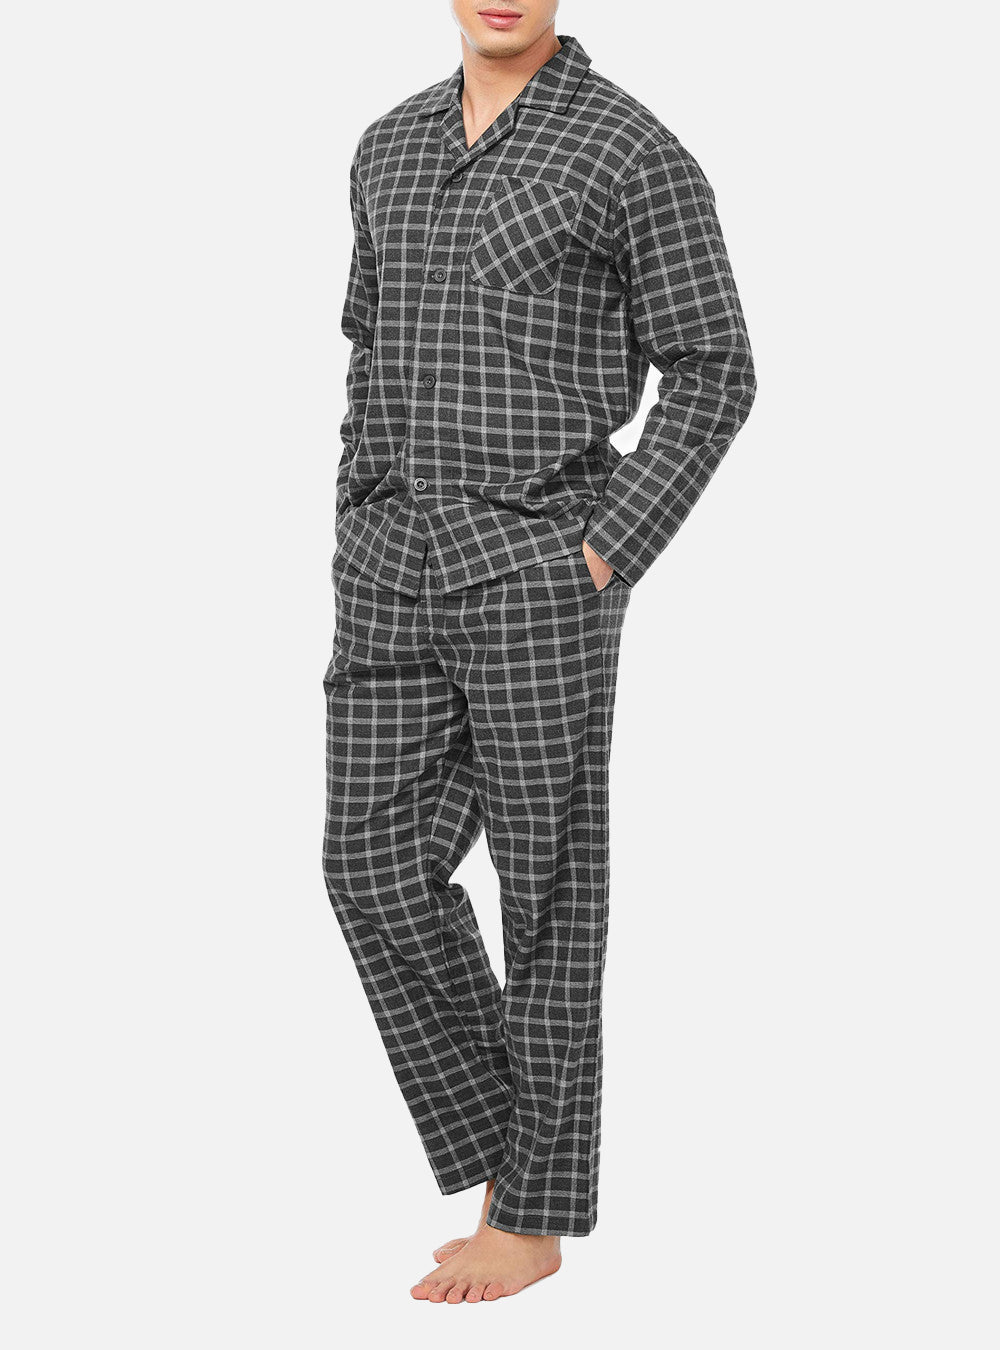 David Archy Sleepwear Set Flannel Button-Down V-Neck Lounge Wear